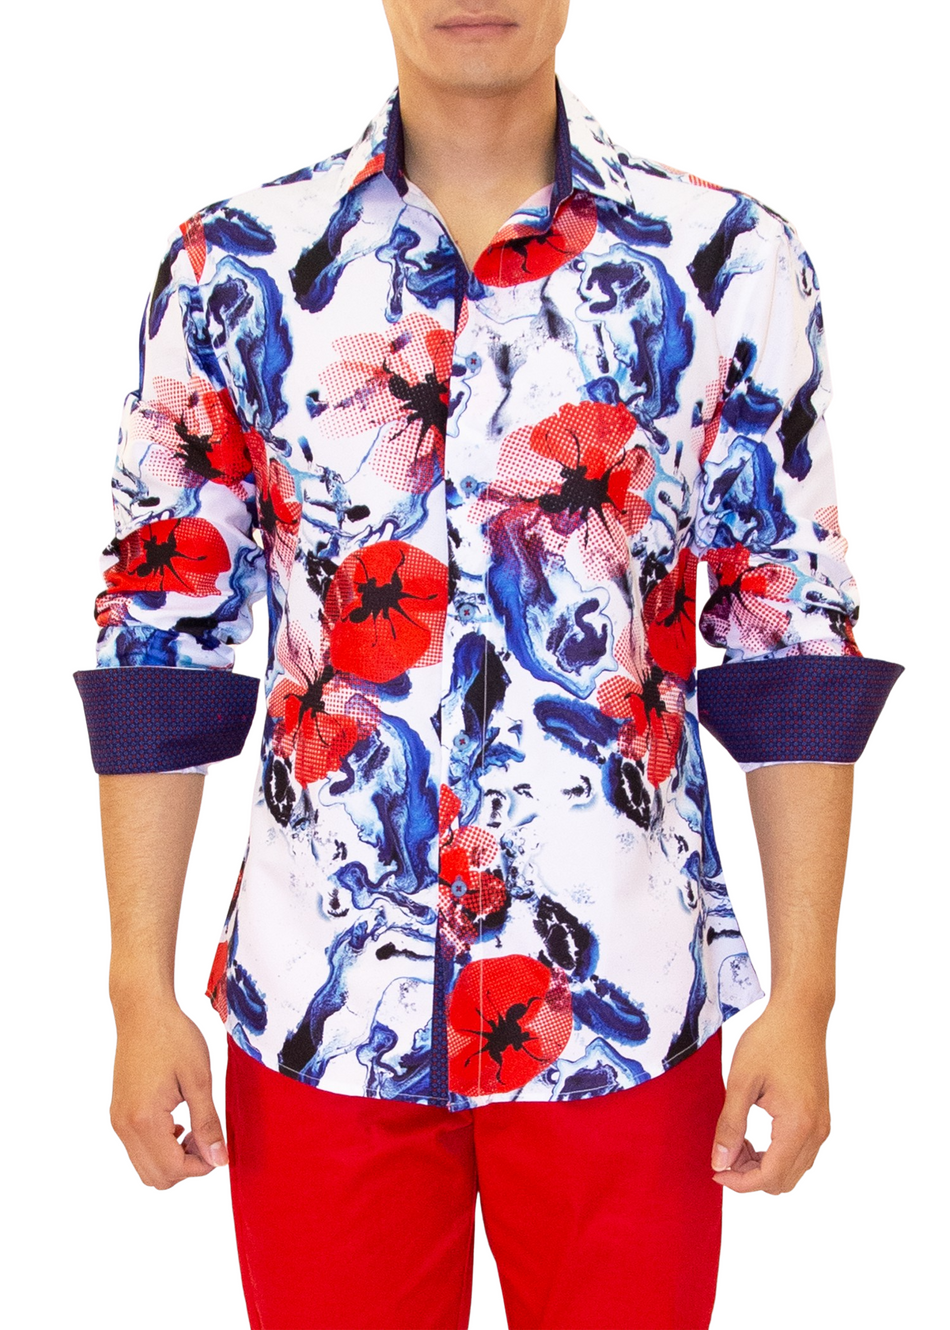 Abstract Floral Print Long Sleeve Dress Shirt Blue